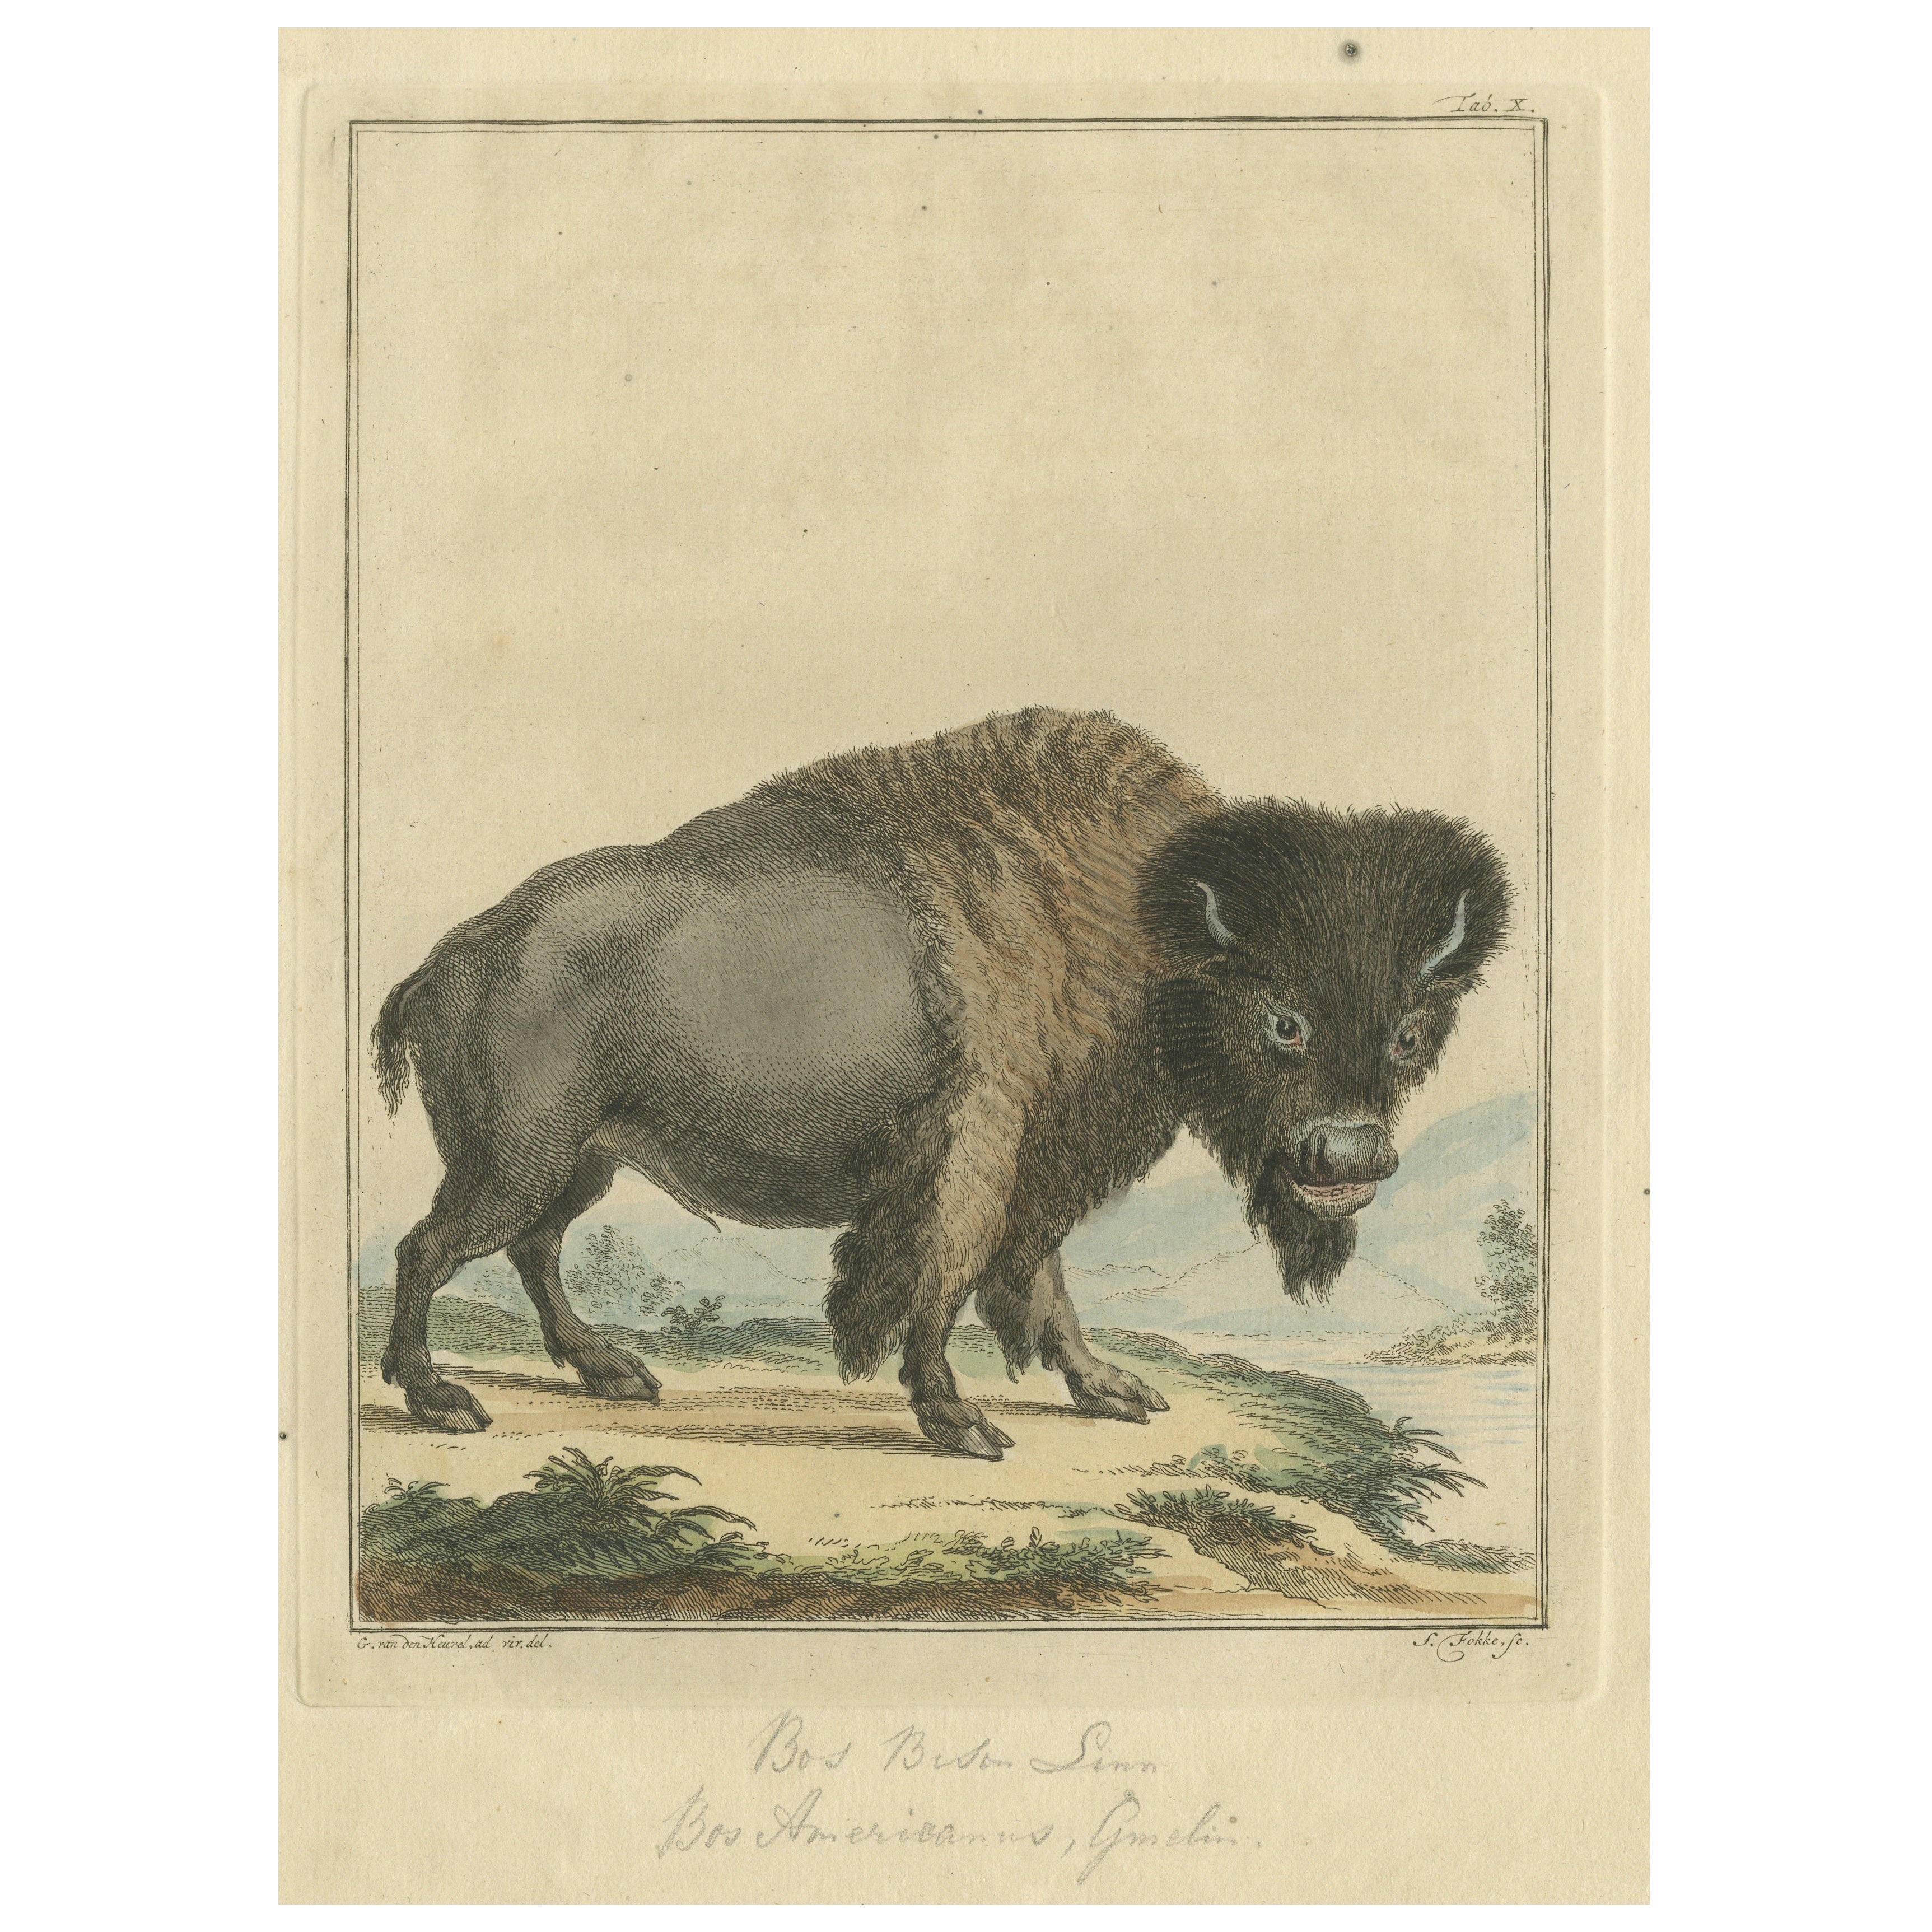 Original Antique Print of a Bison For Sale